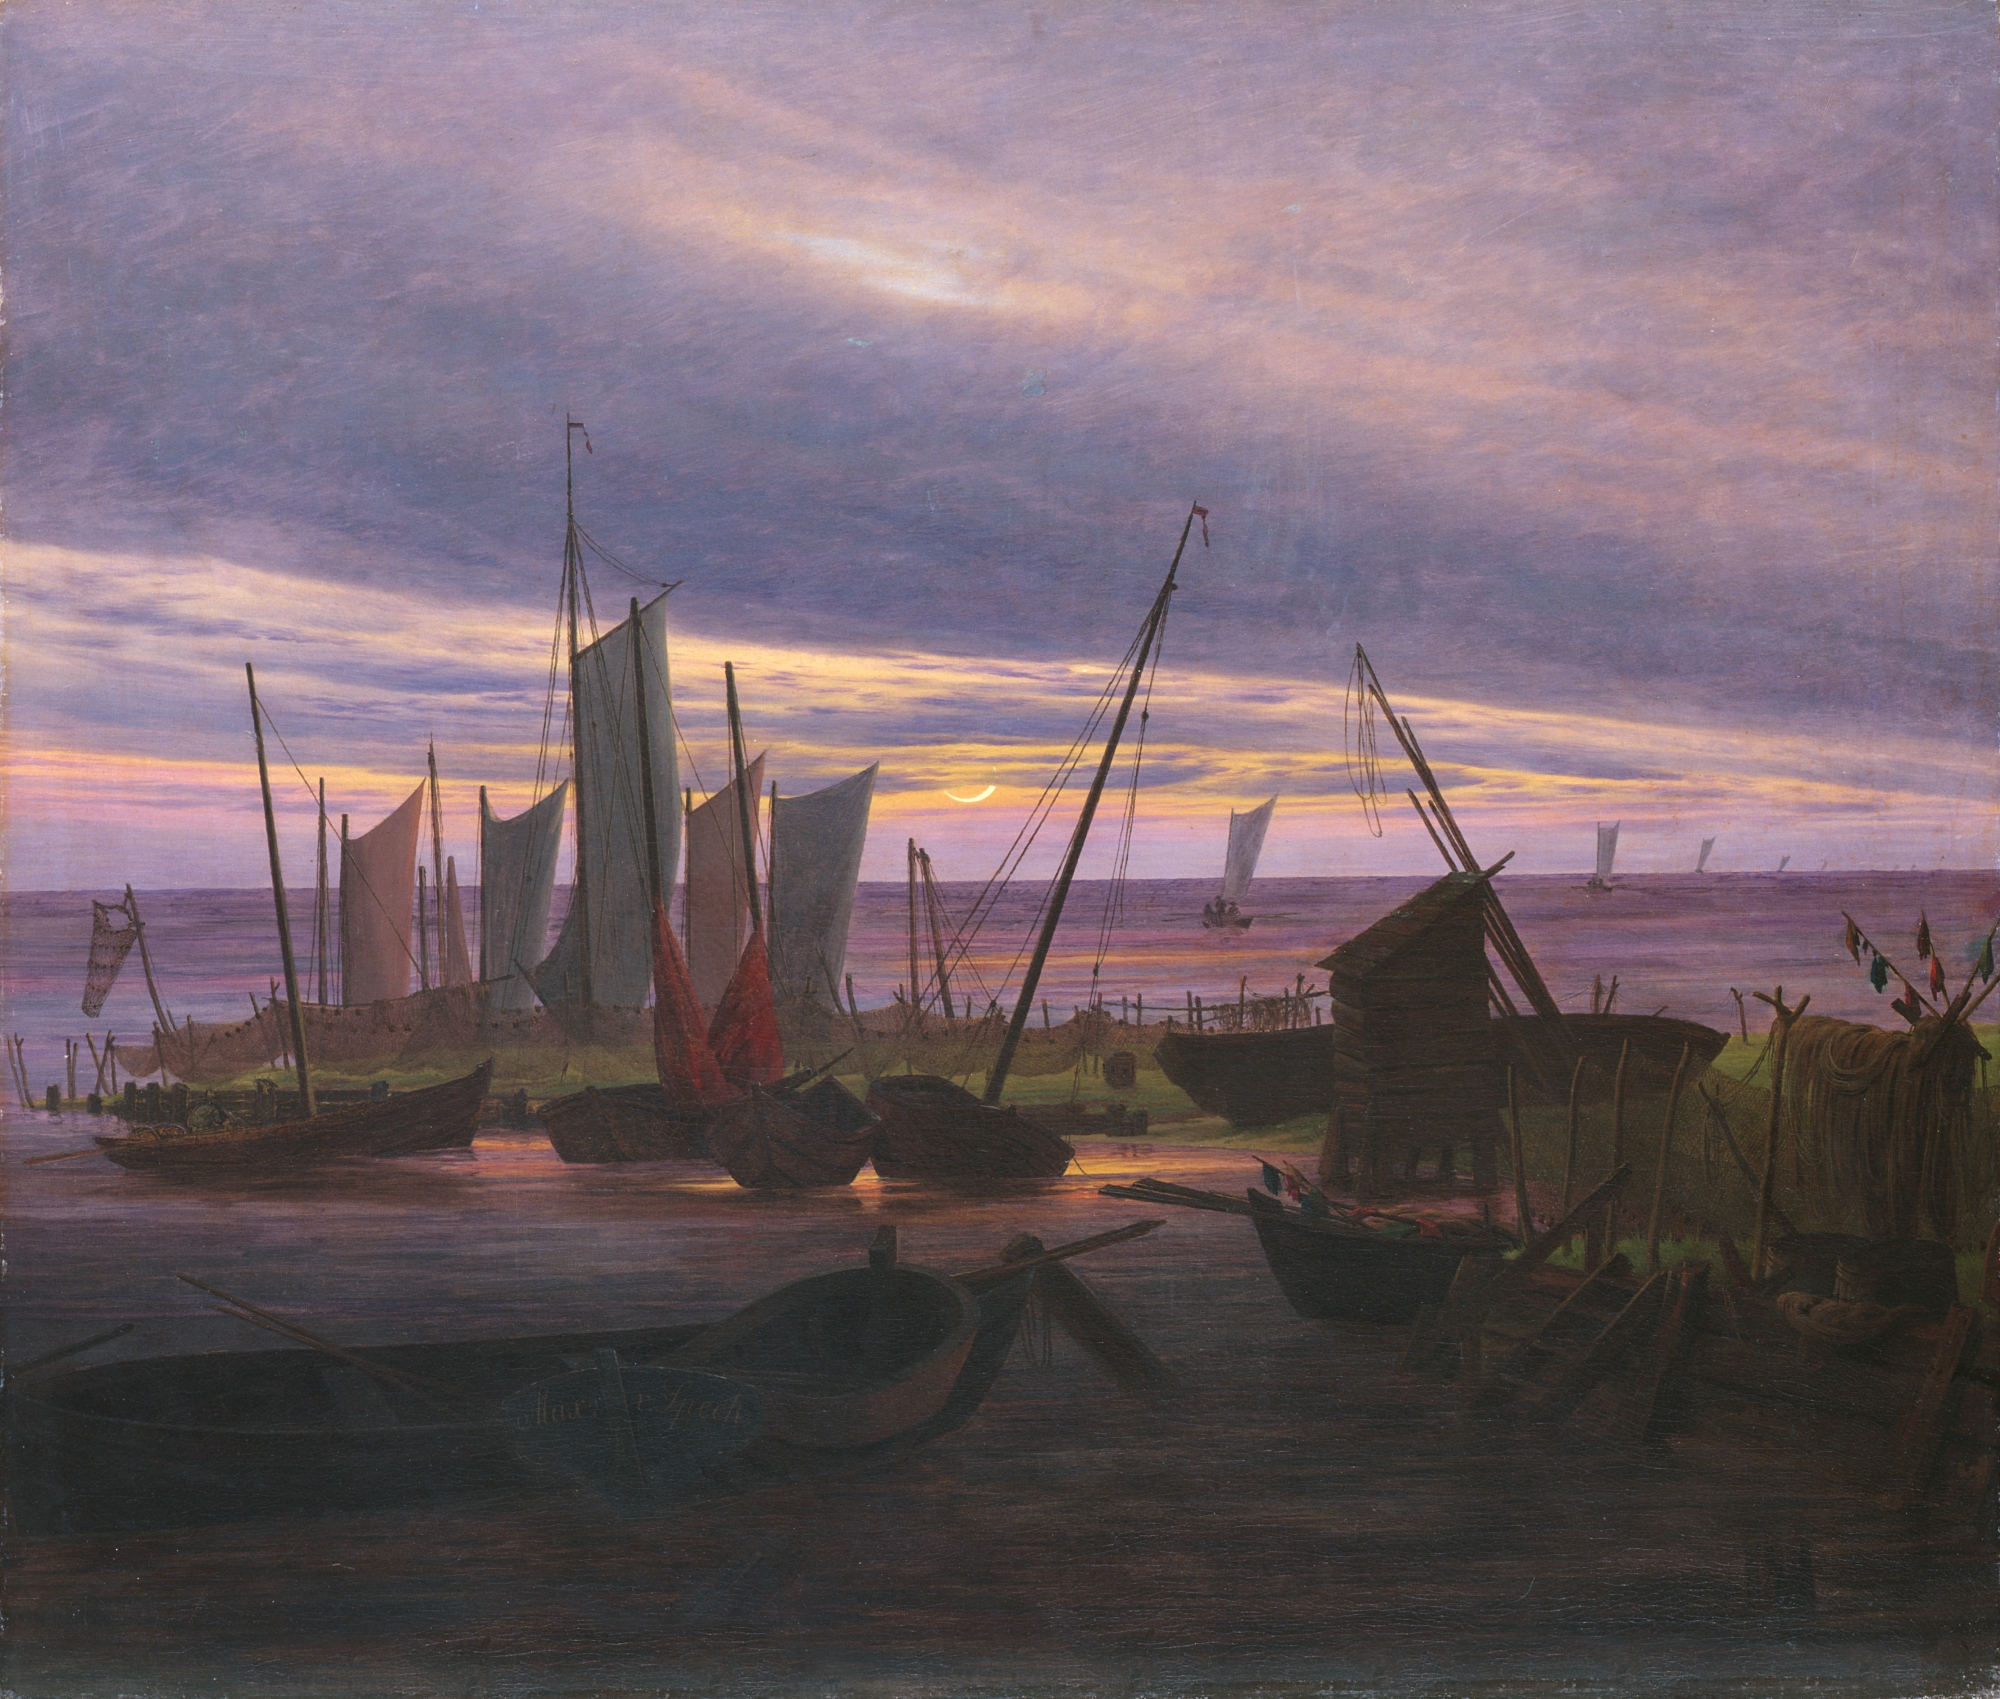 Navires dans le port, le soir by Caspar David Friedrich - 1828 - 76.5 x 88.2 cm Staatliche Kunstsammlungen Dresden